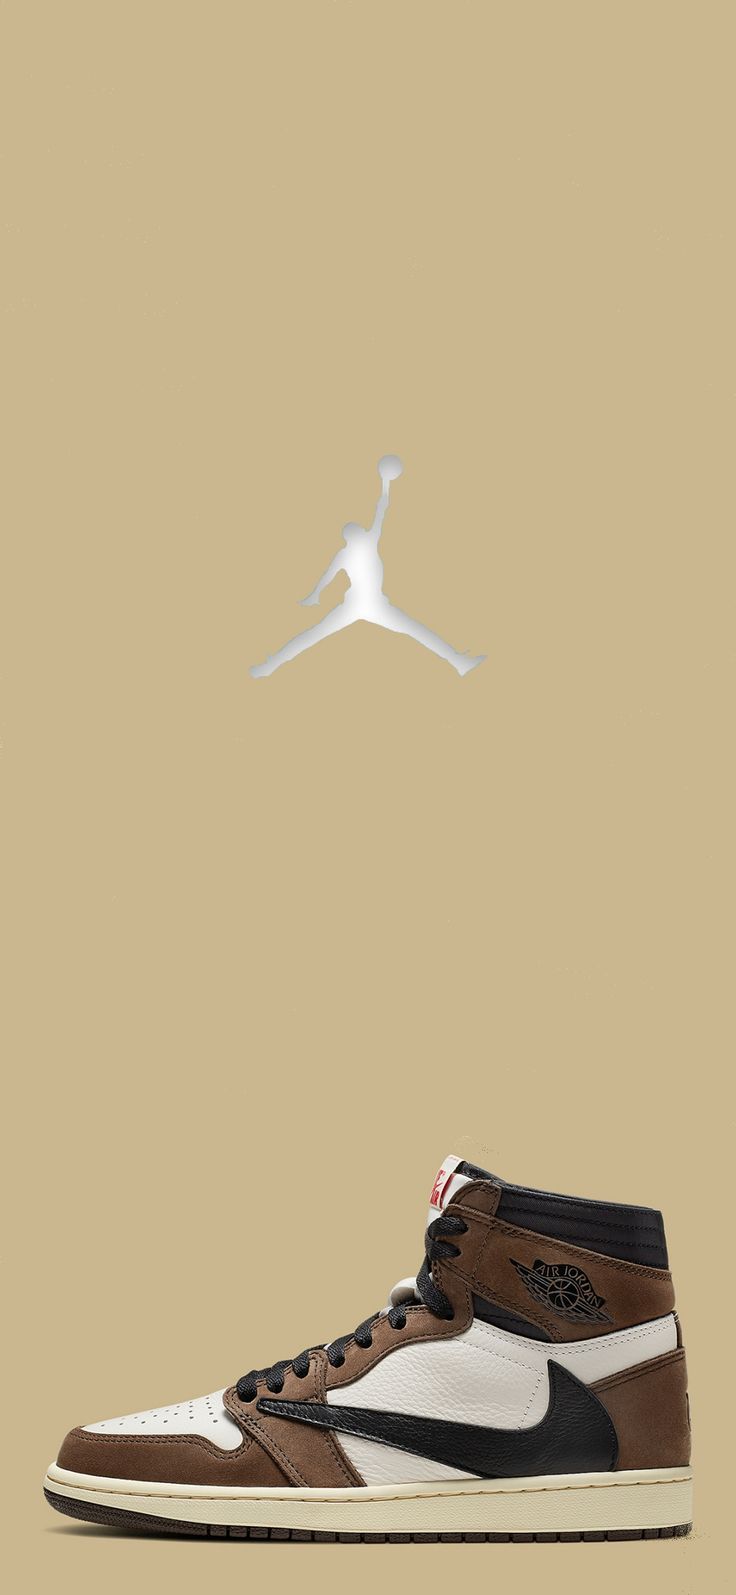 Air Jordan S Travis Scott Papel De Parede Da Nike